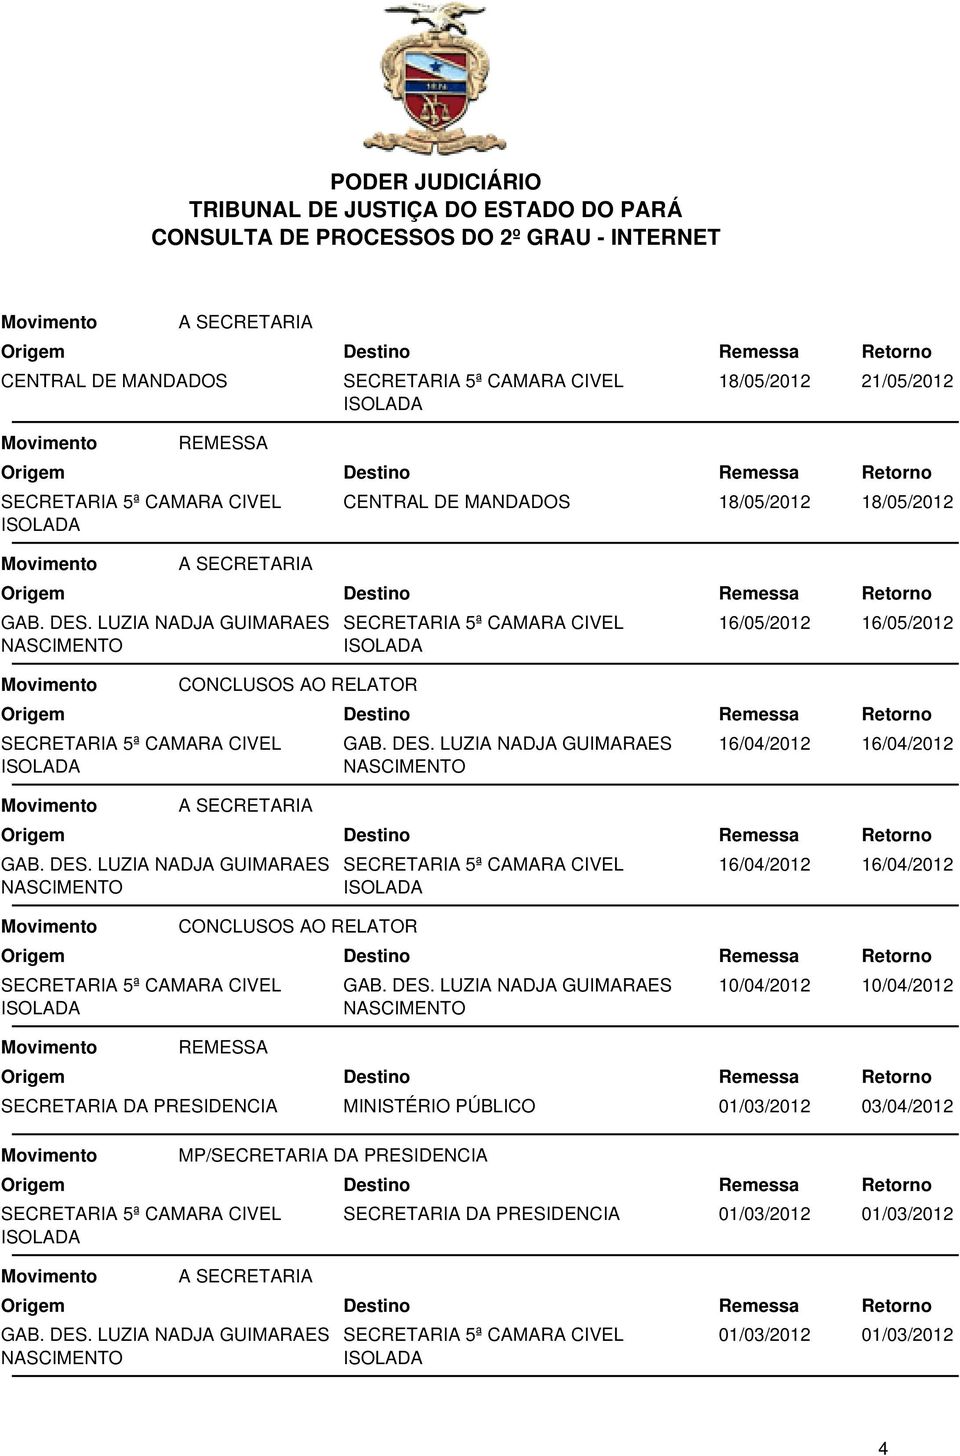 10/04/2012 REMESSA SECRETARIA DA PRESIDENCIA MINISTÉRIO PÚBLICO 01/03/2012 03/04/2012